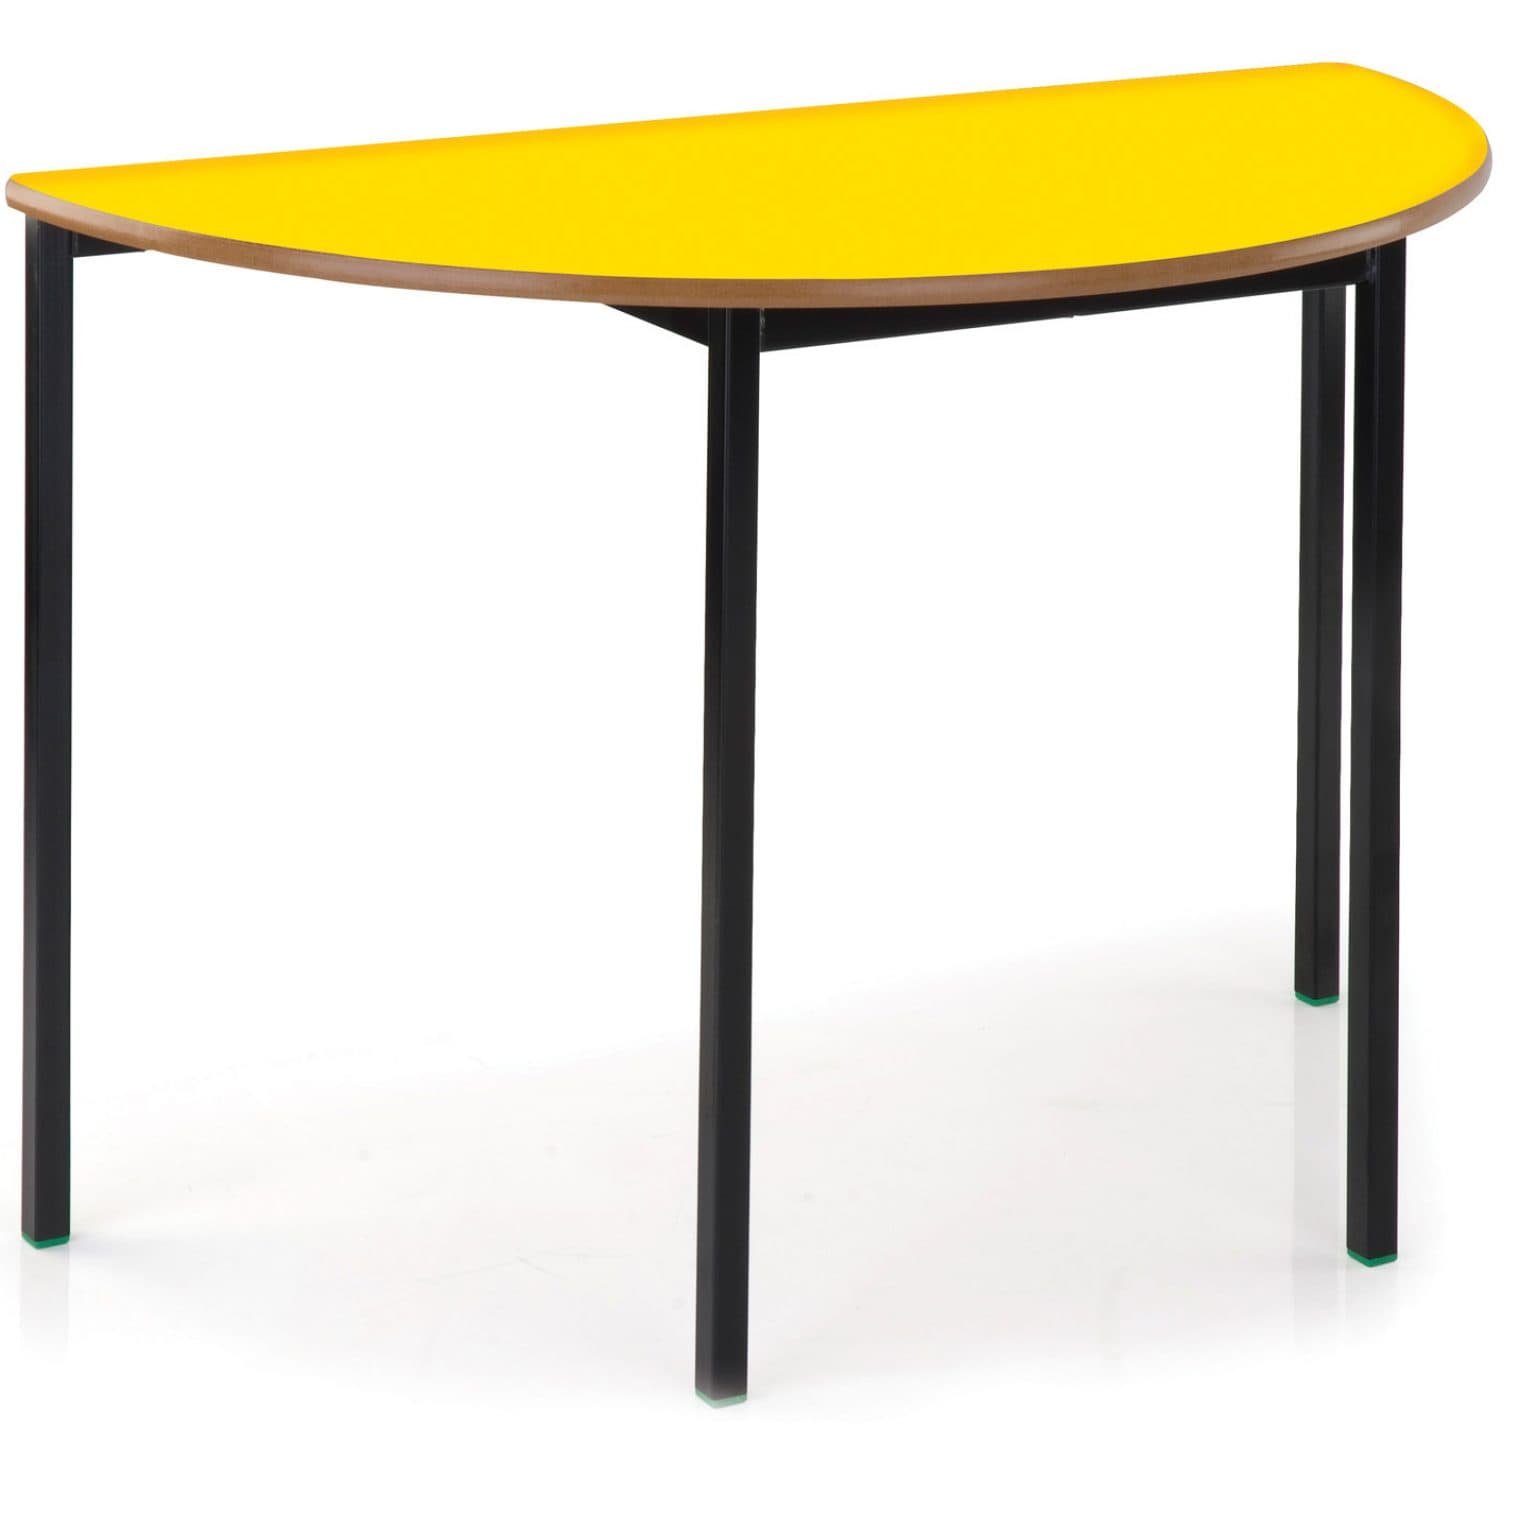 Fully Welded Semi-Circular Classroom Tables